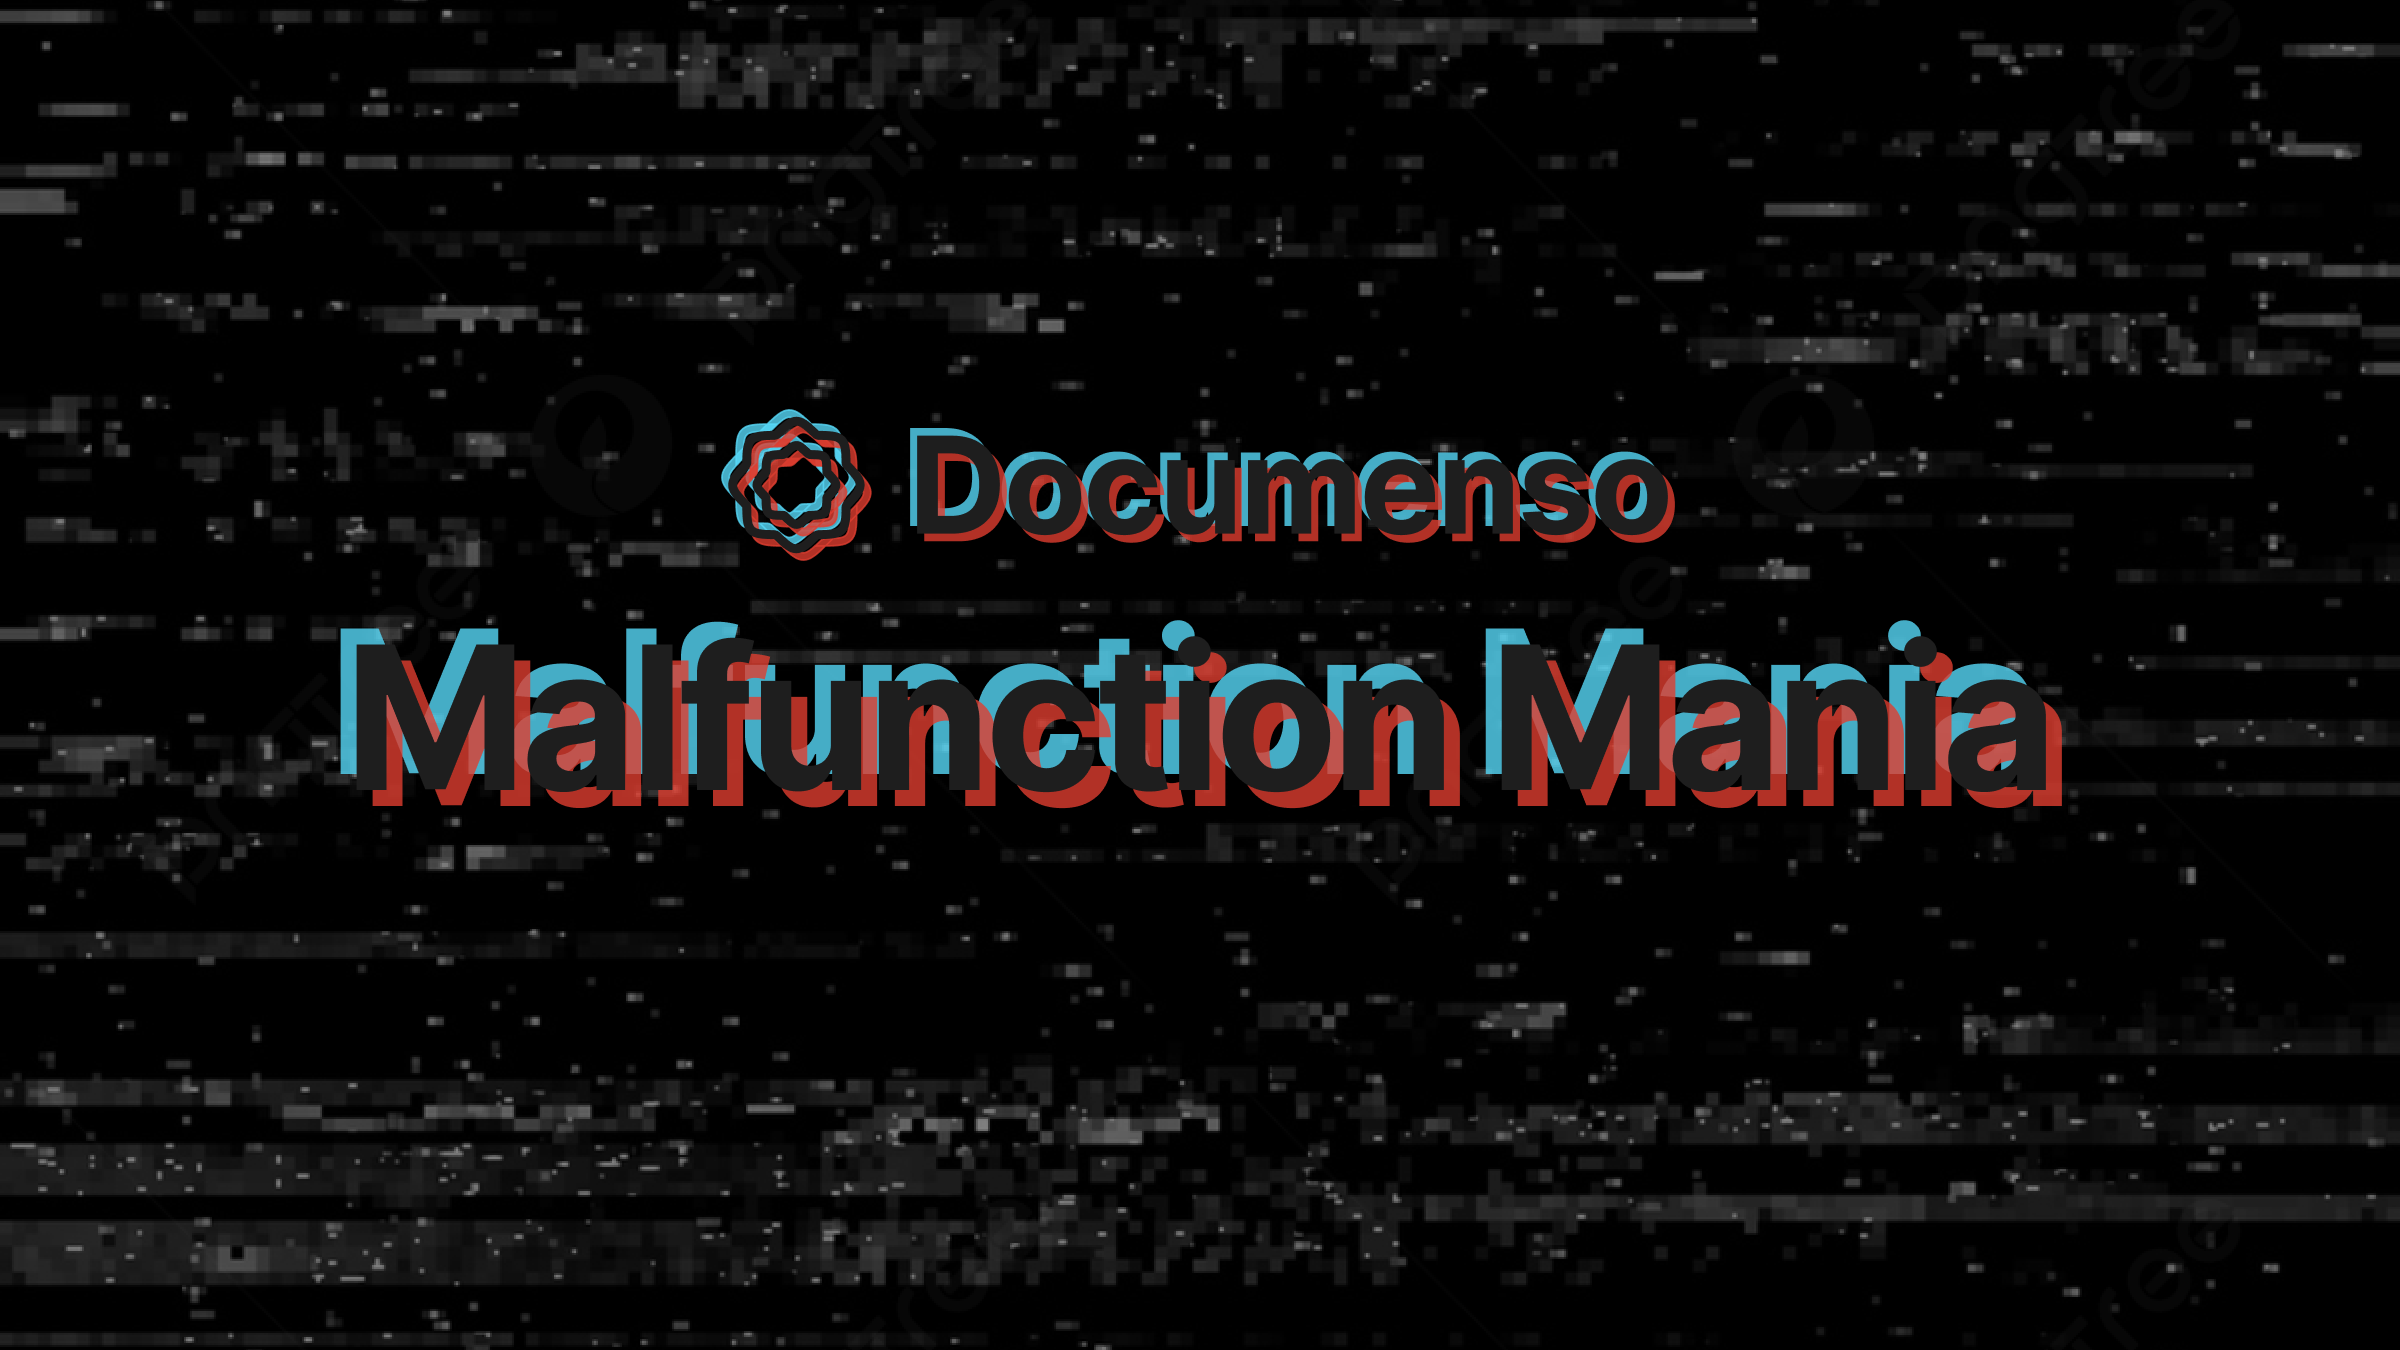 Malfunctioning Documenso Logo in broken colors